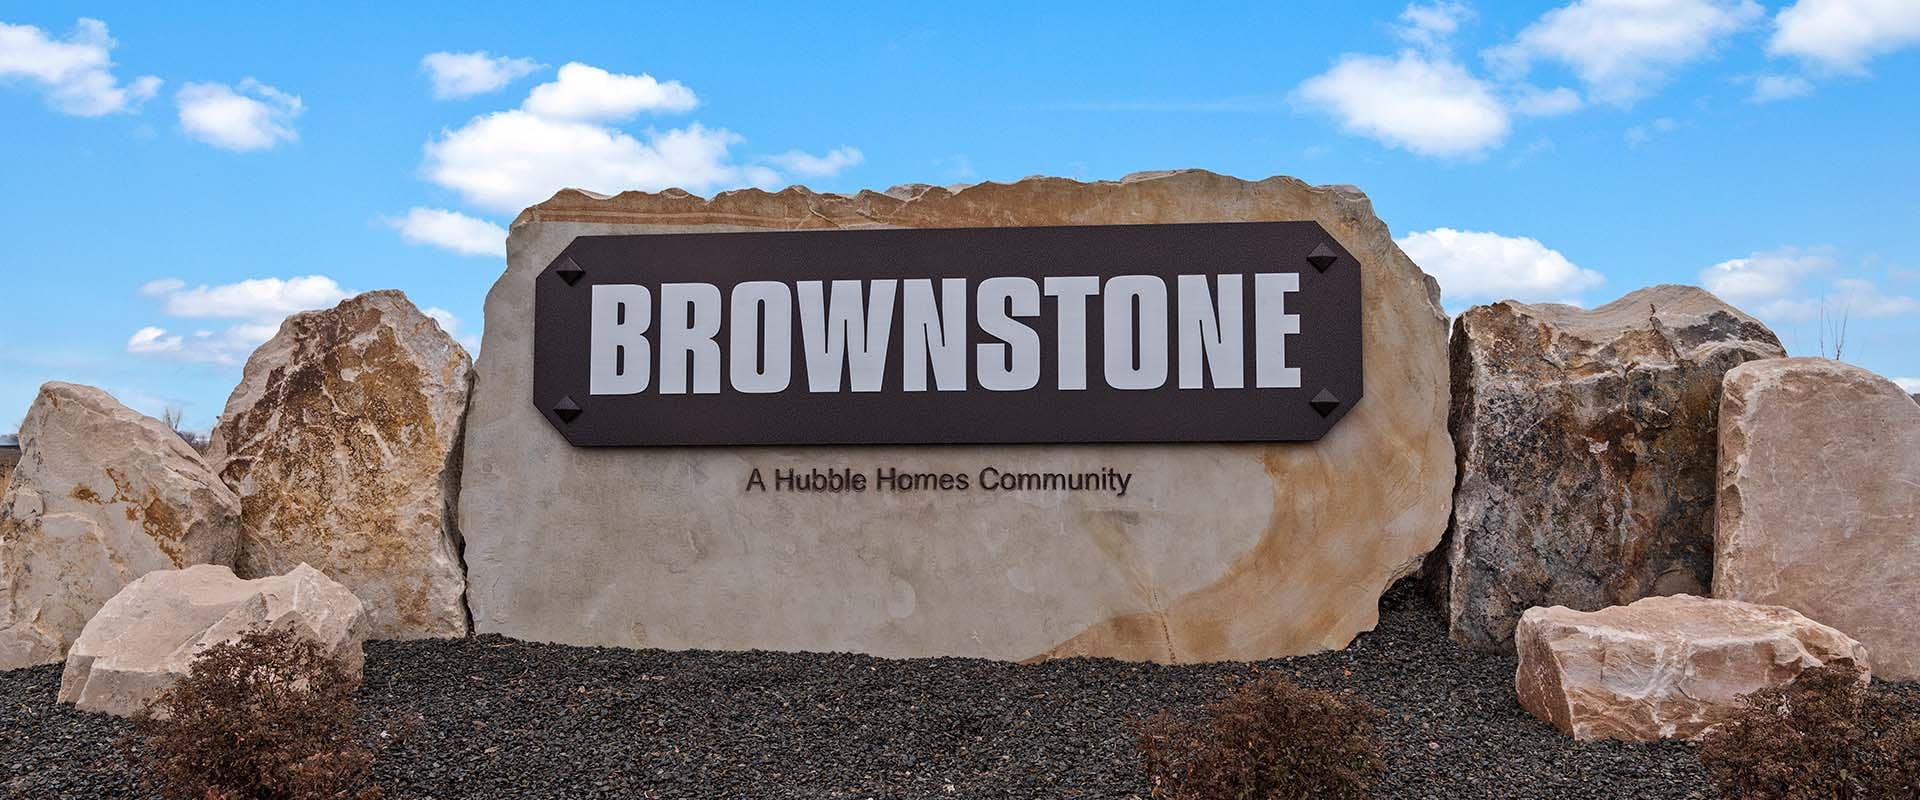 Brownstone-Hubble Homes New-Homes-Nampa-Idaho_0002_Brownstone Sign-1.jpg